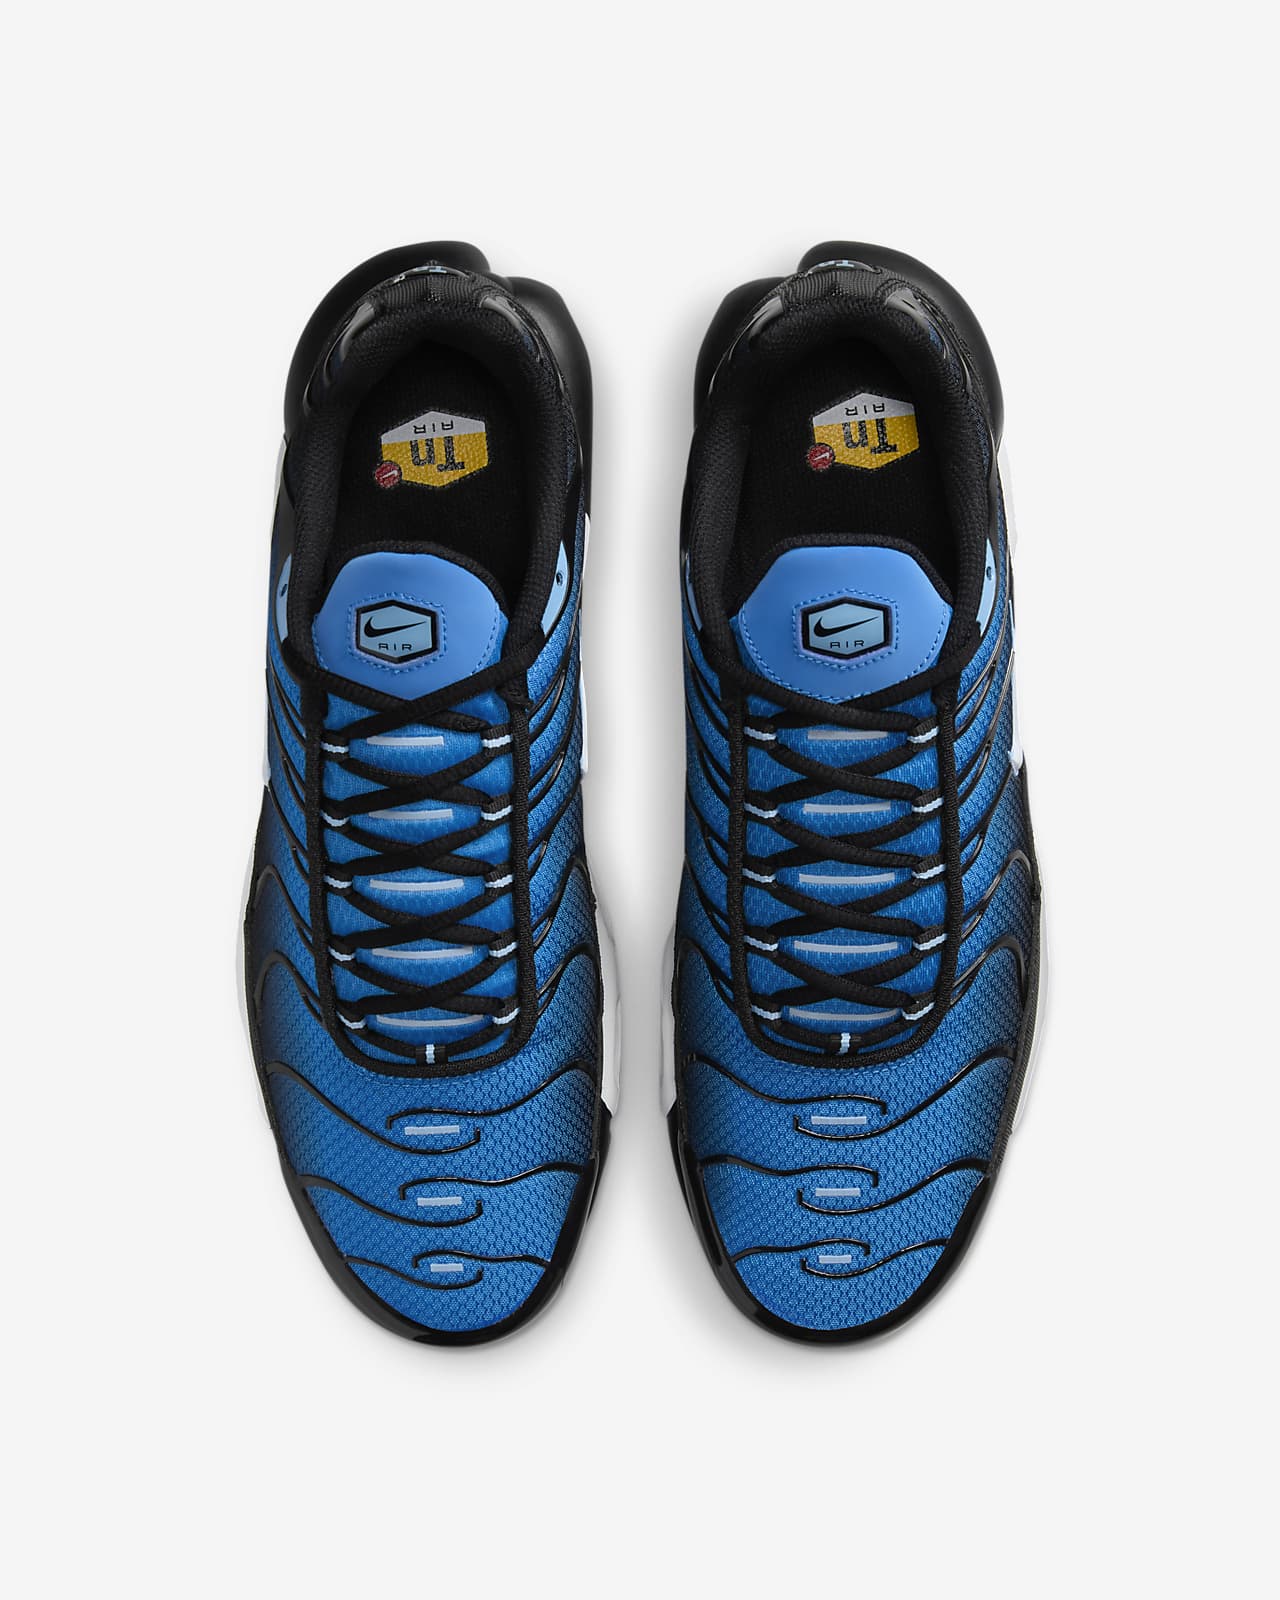 Original Nike Air Max Plus Tuned 1 TN White Black Blue Trainers Shoes  CT1097 002